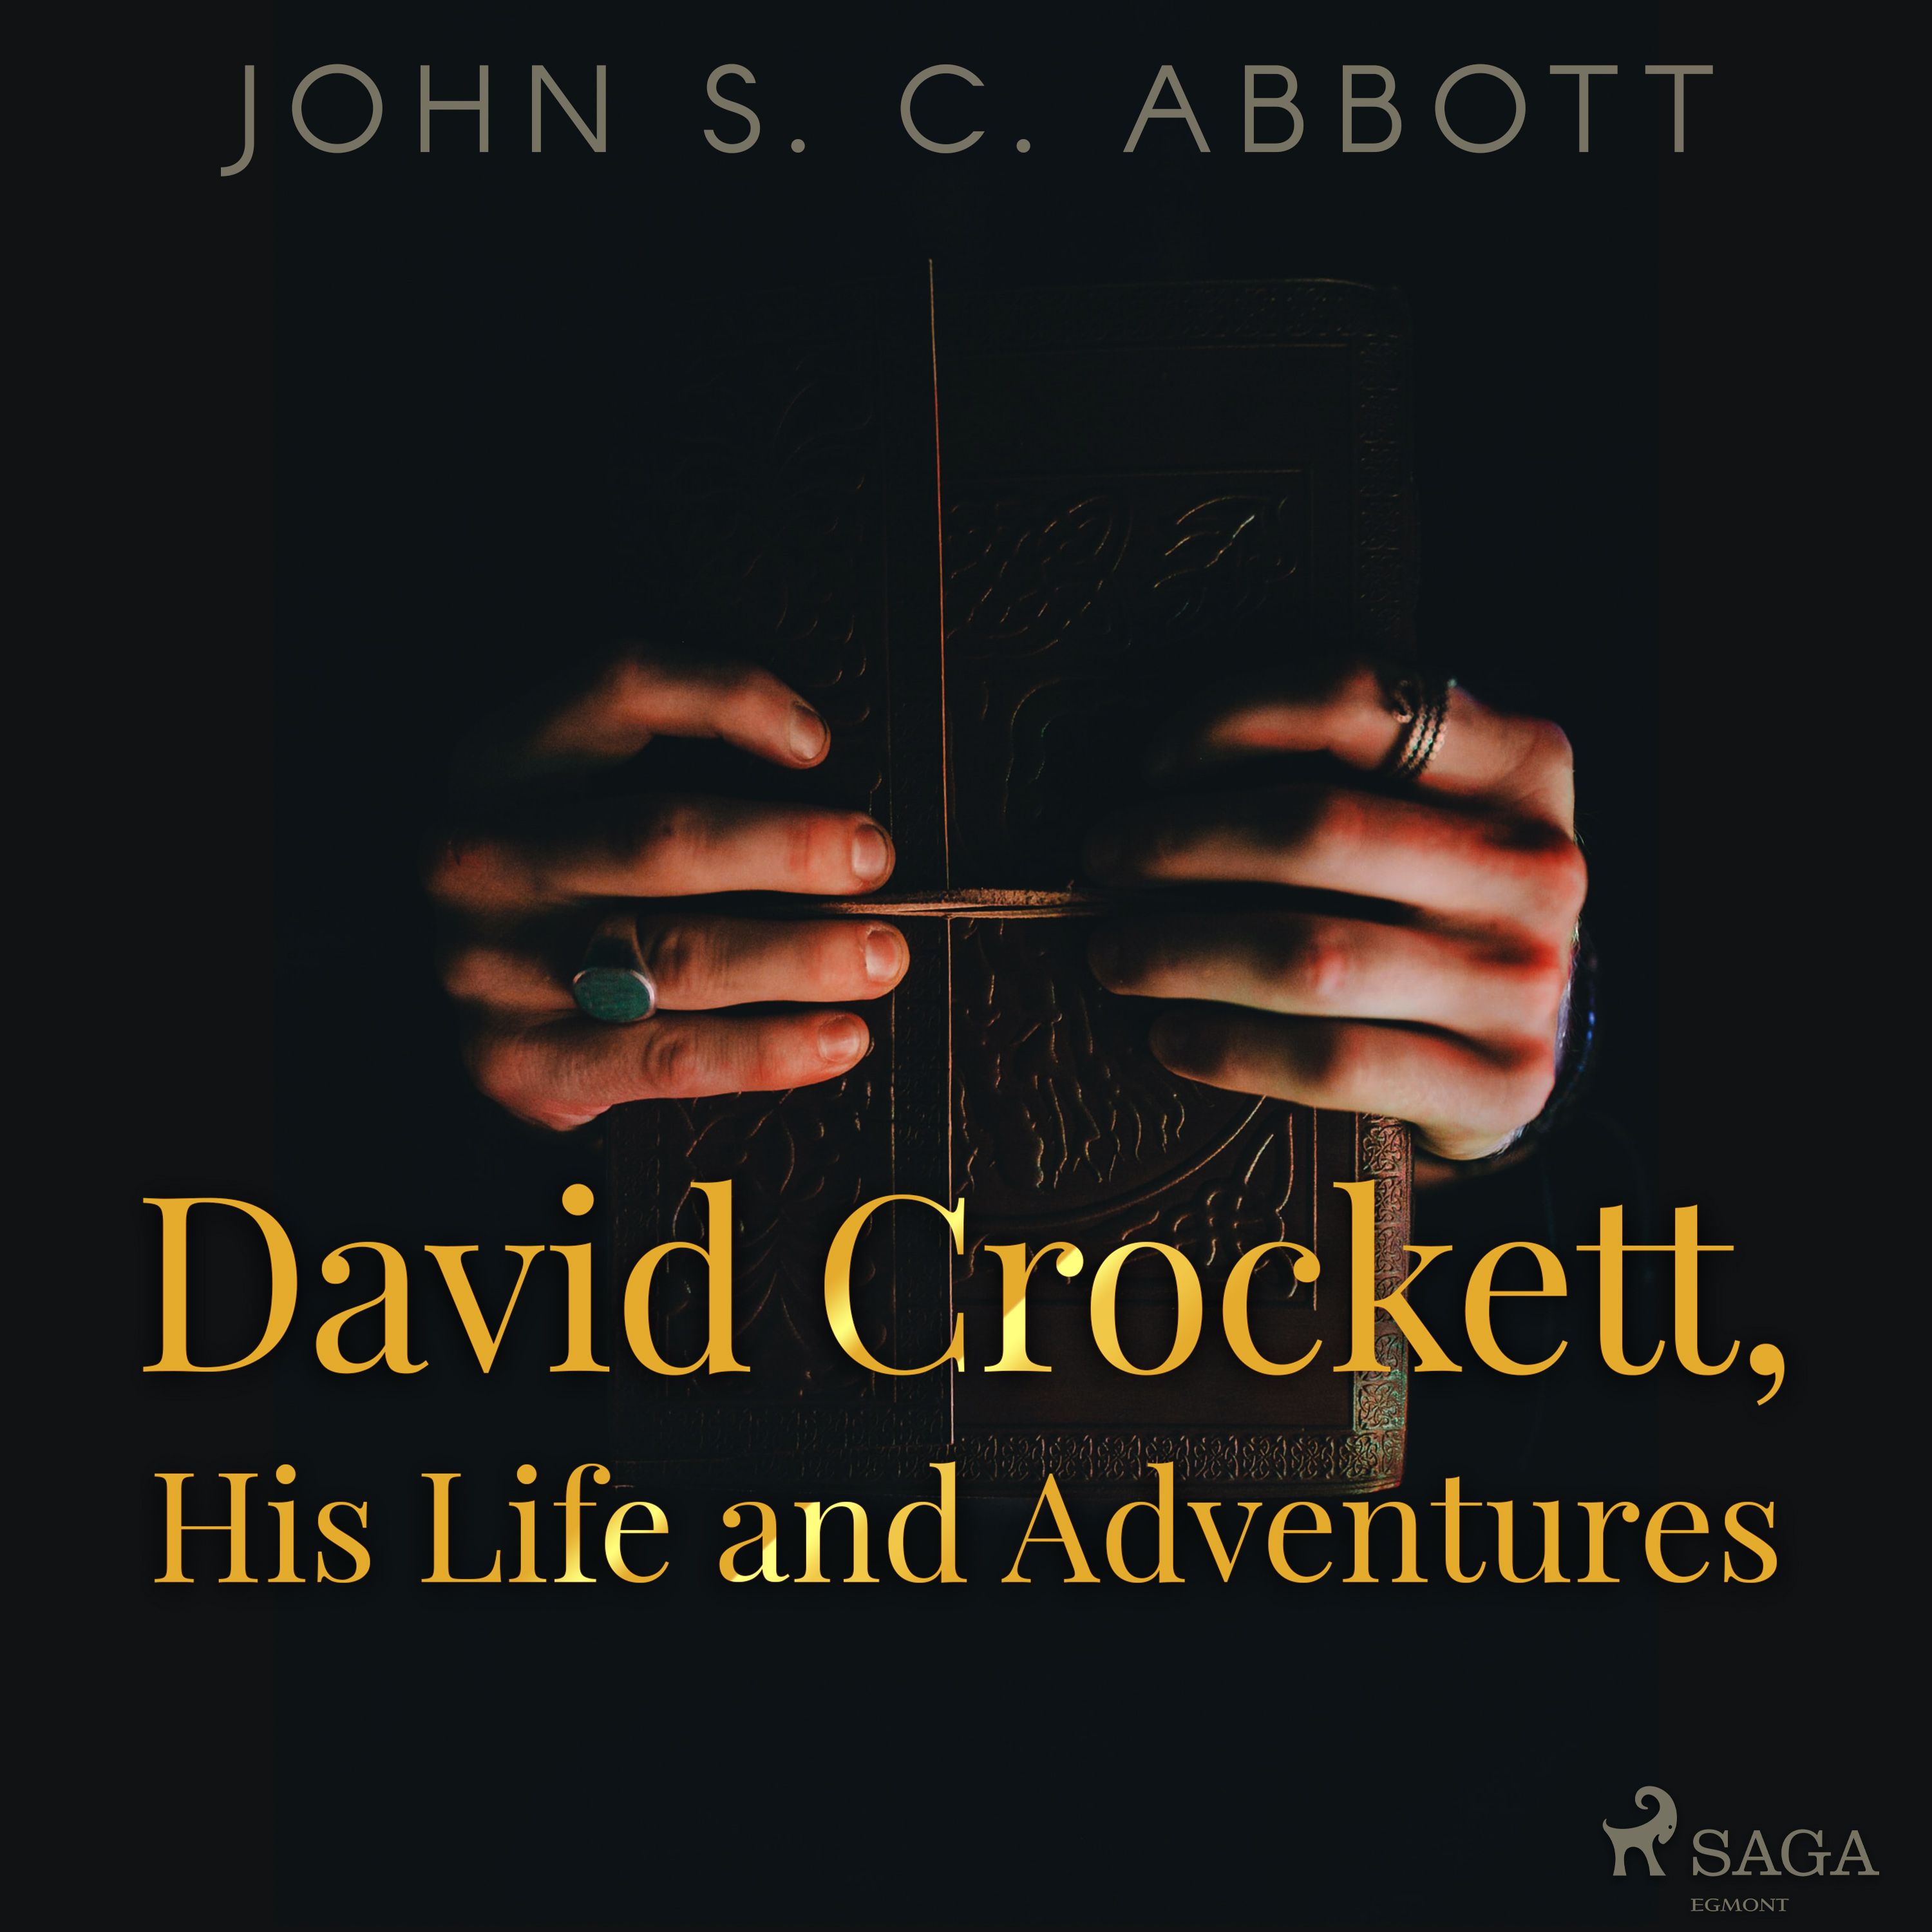 David Crockett, His Life and Adventures, lydbog af John S. C. Abbott